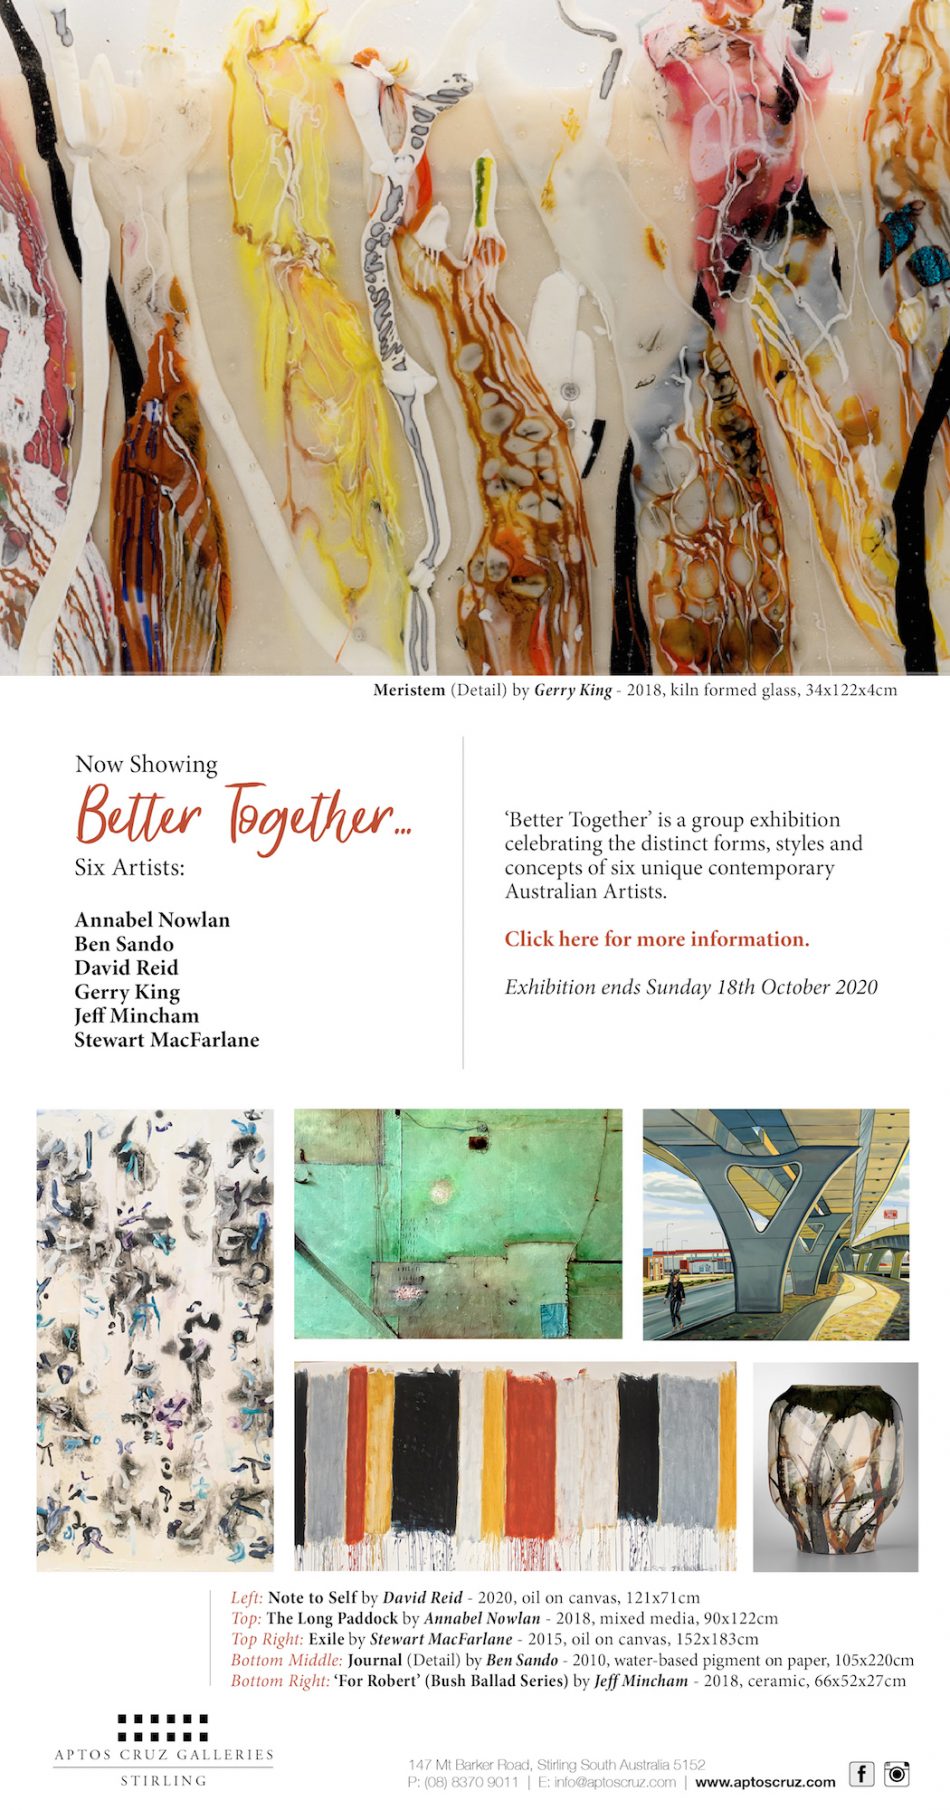 Better Together is a group exhibition featuring Annabel Nolan, Ben Sando, David Reid, Gerry King, Jeff Mincham and Stewart MacFarlane